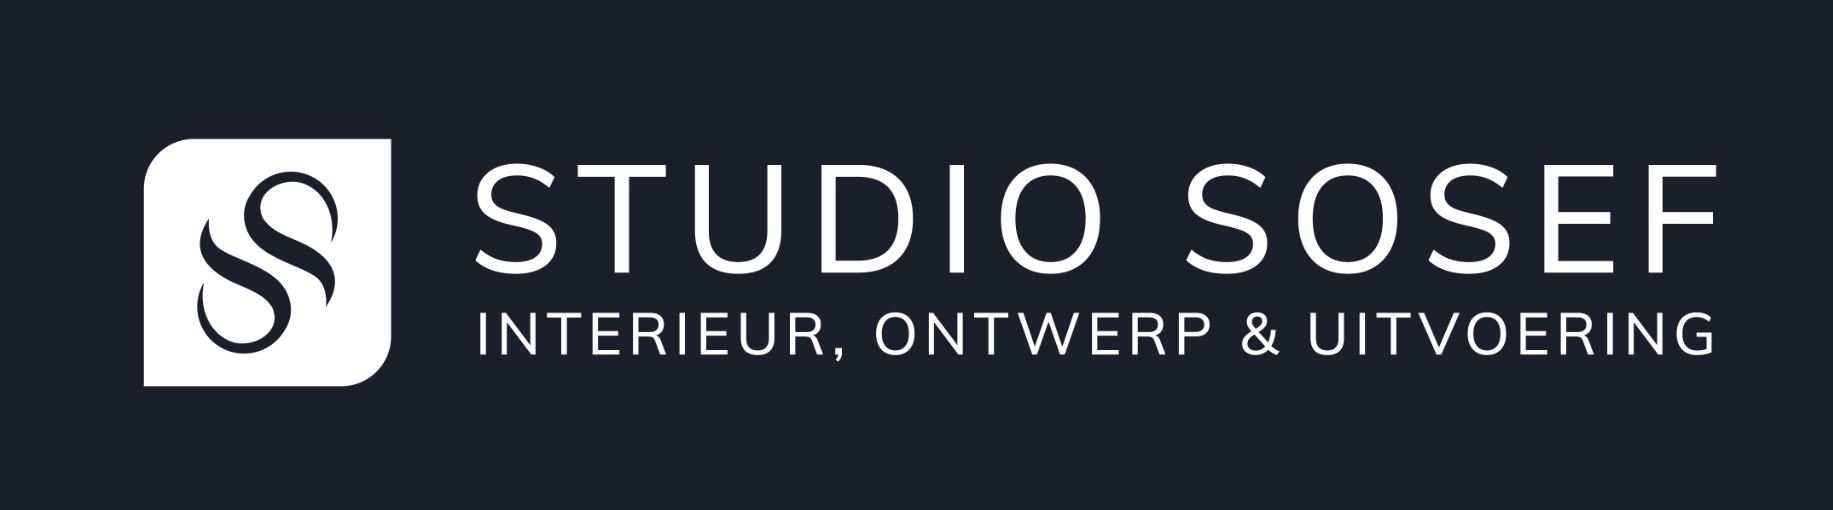 Logo Studio Sosef Interieur, Ontwerp & Uitvoering